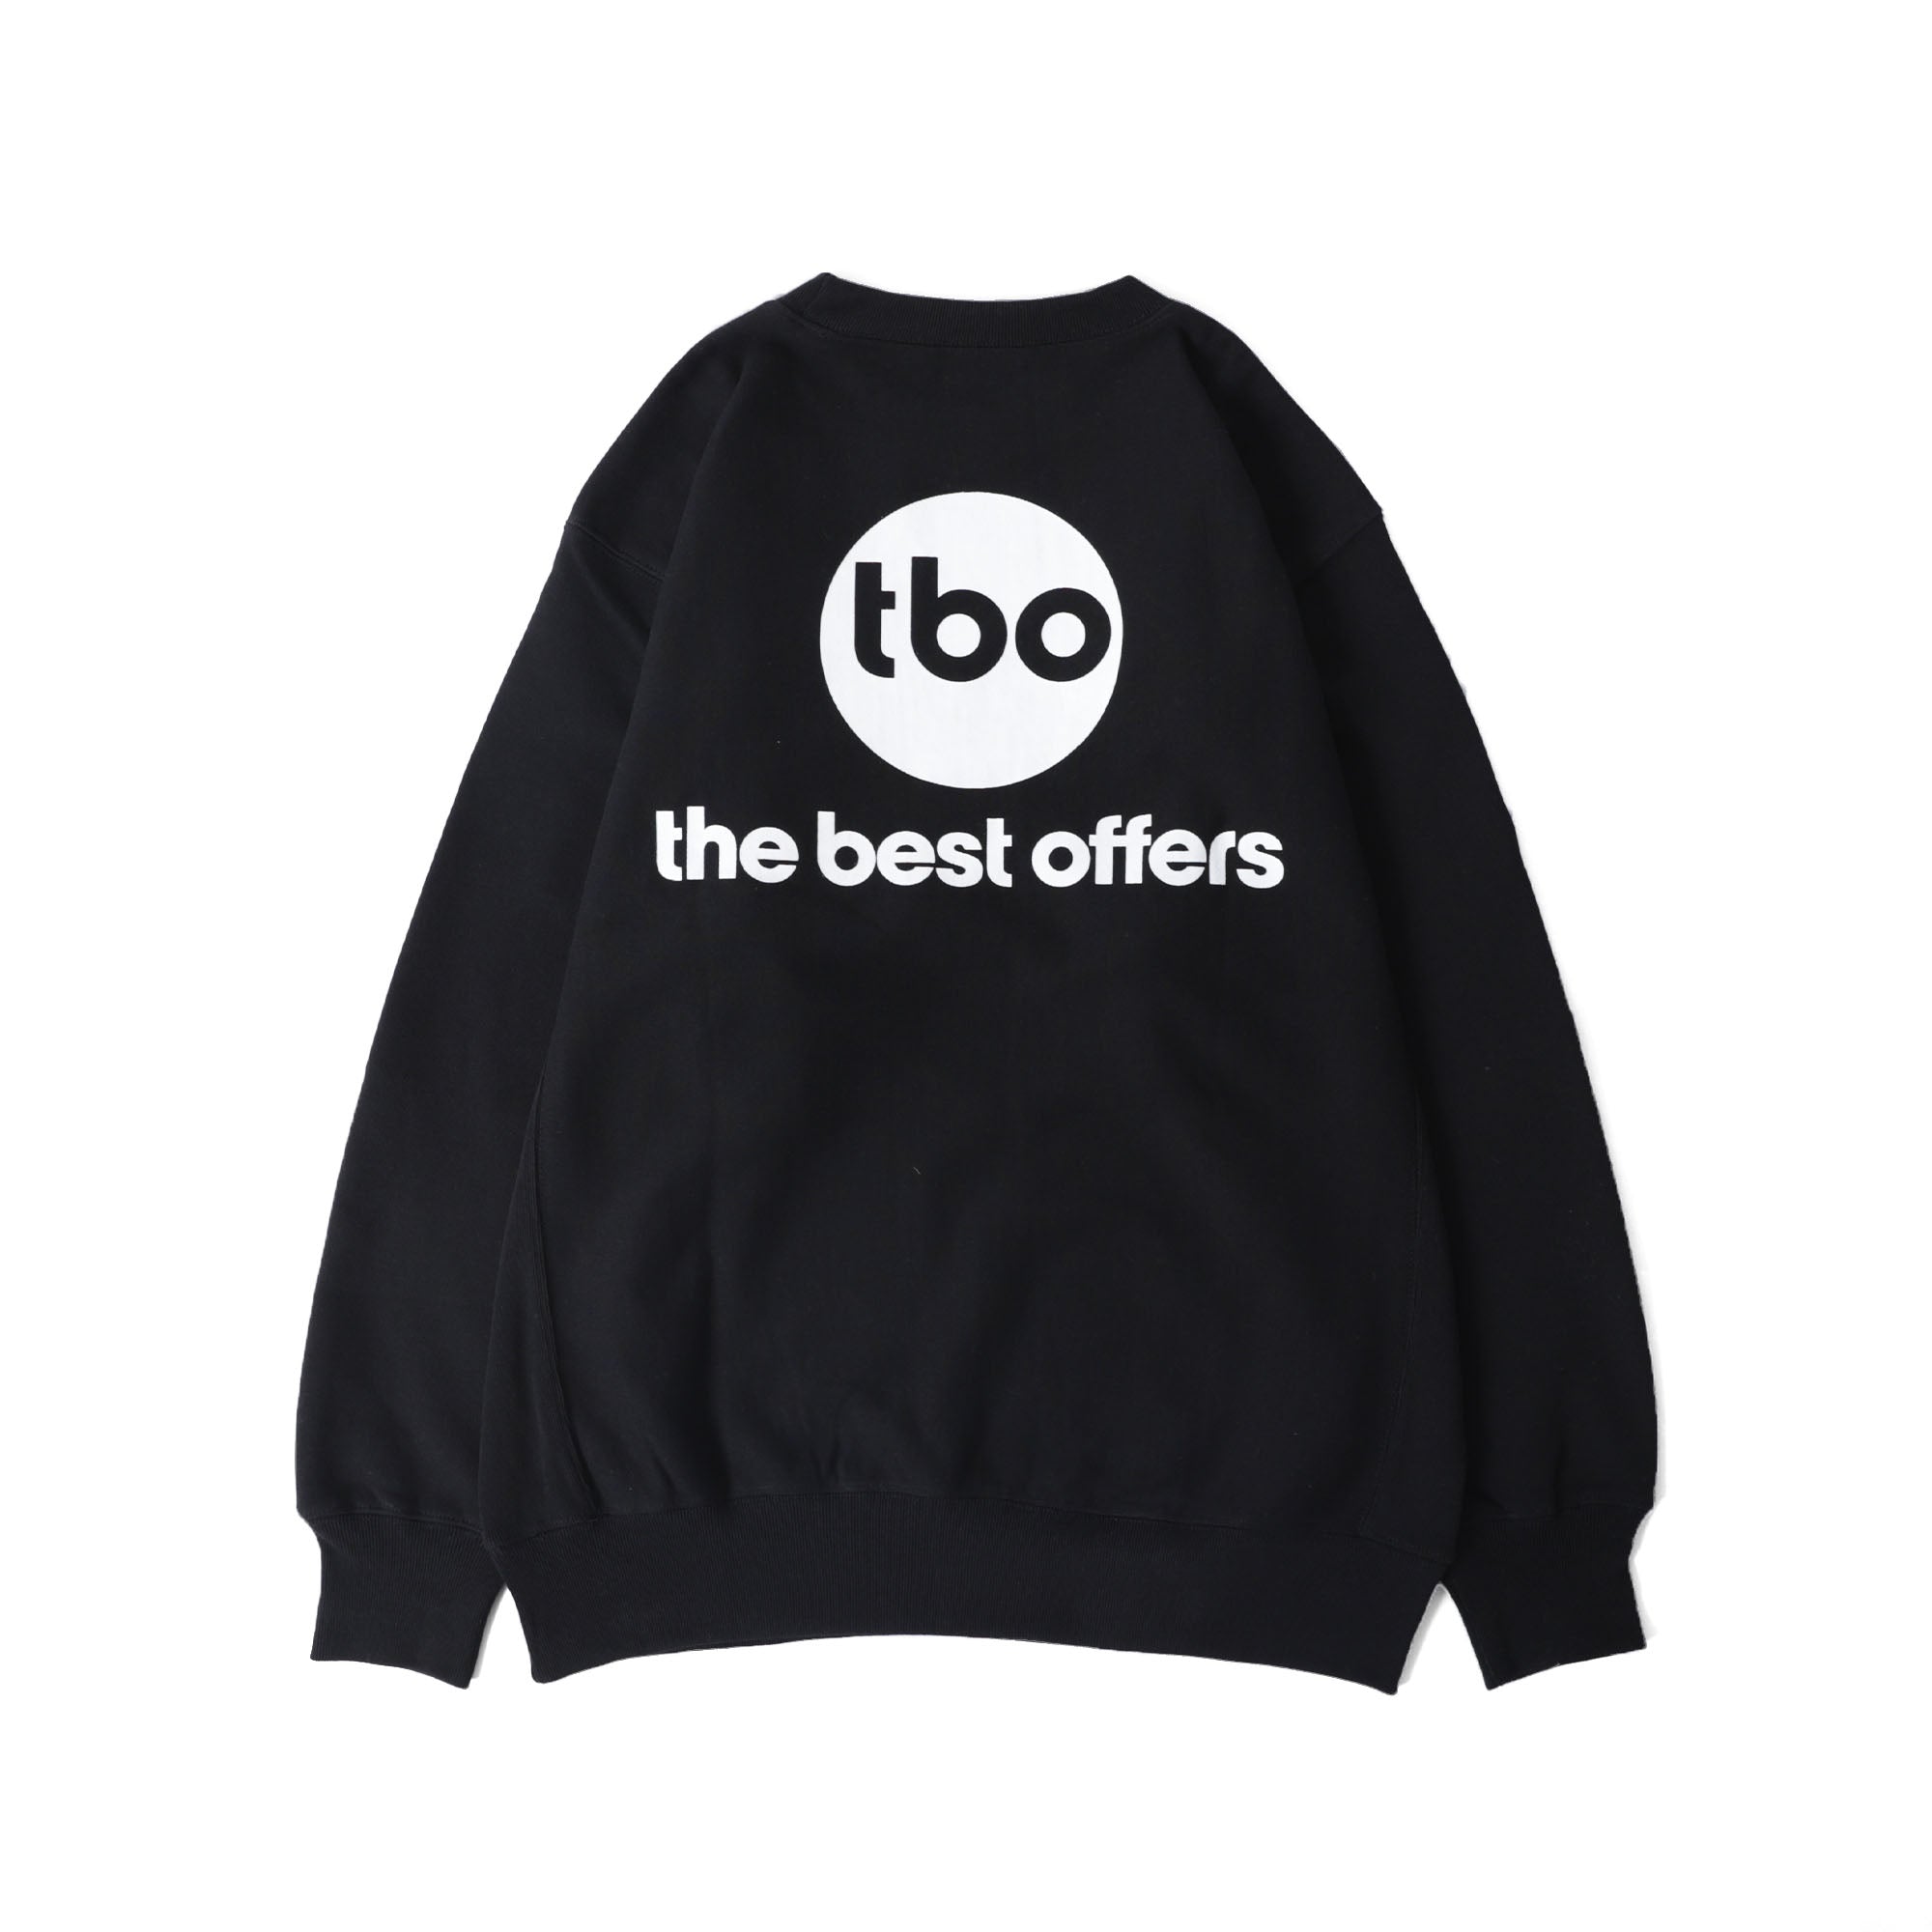 the best offers "tbo LOGO" 12.0oz C/N SWEATSHIRT